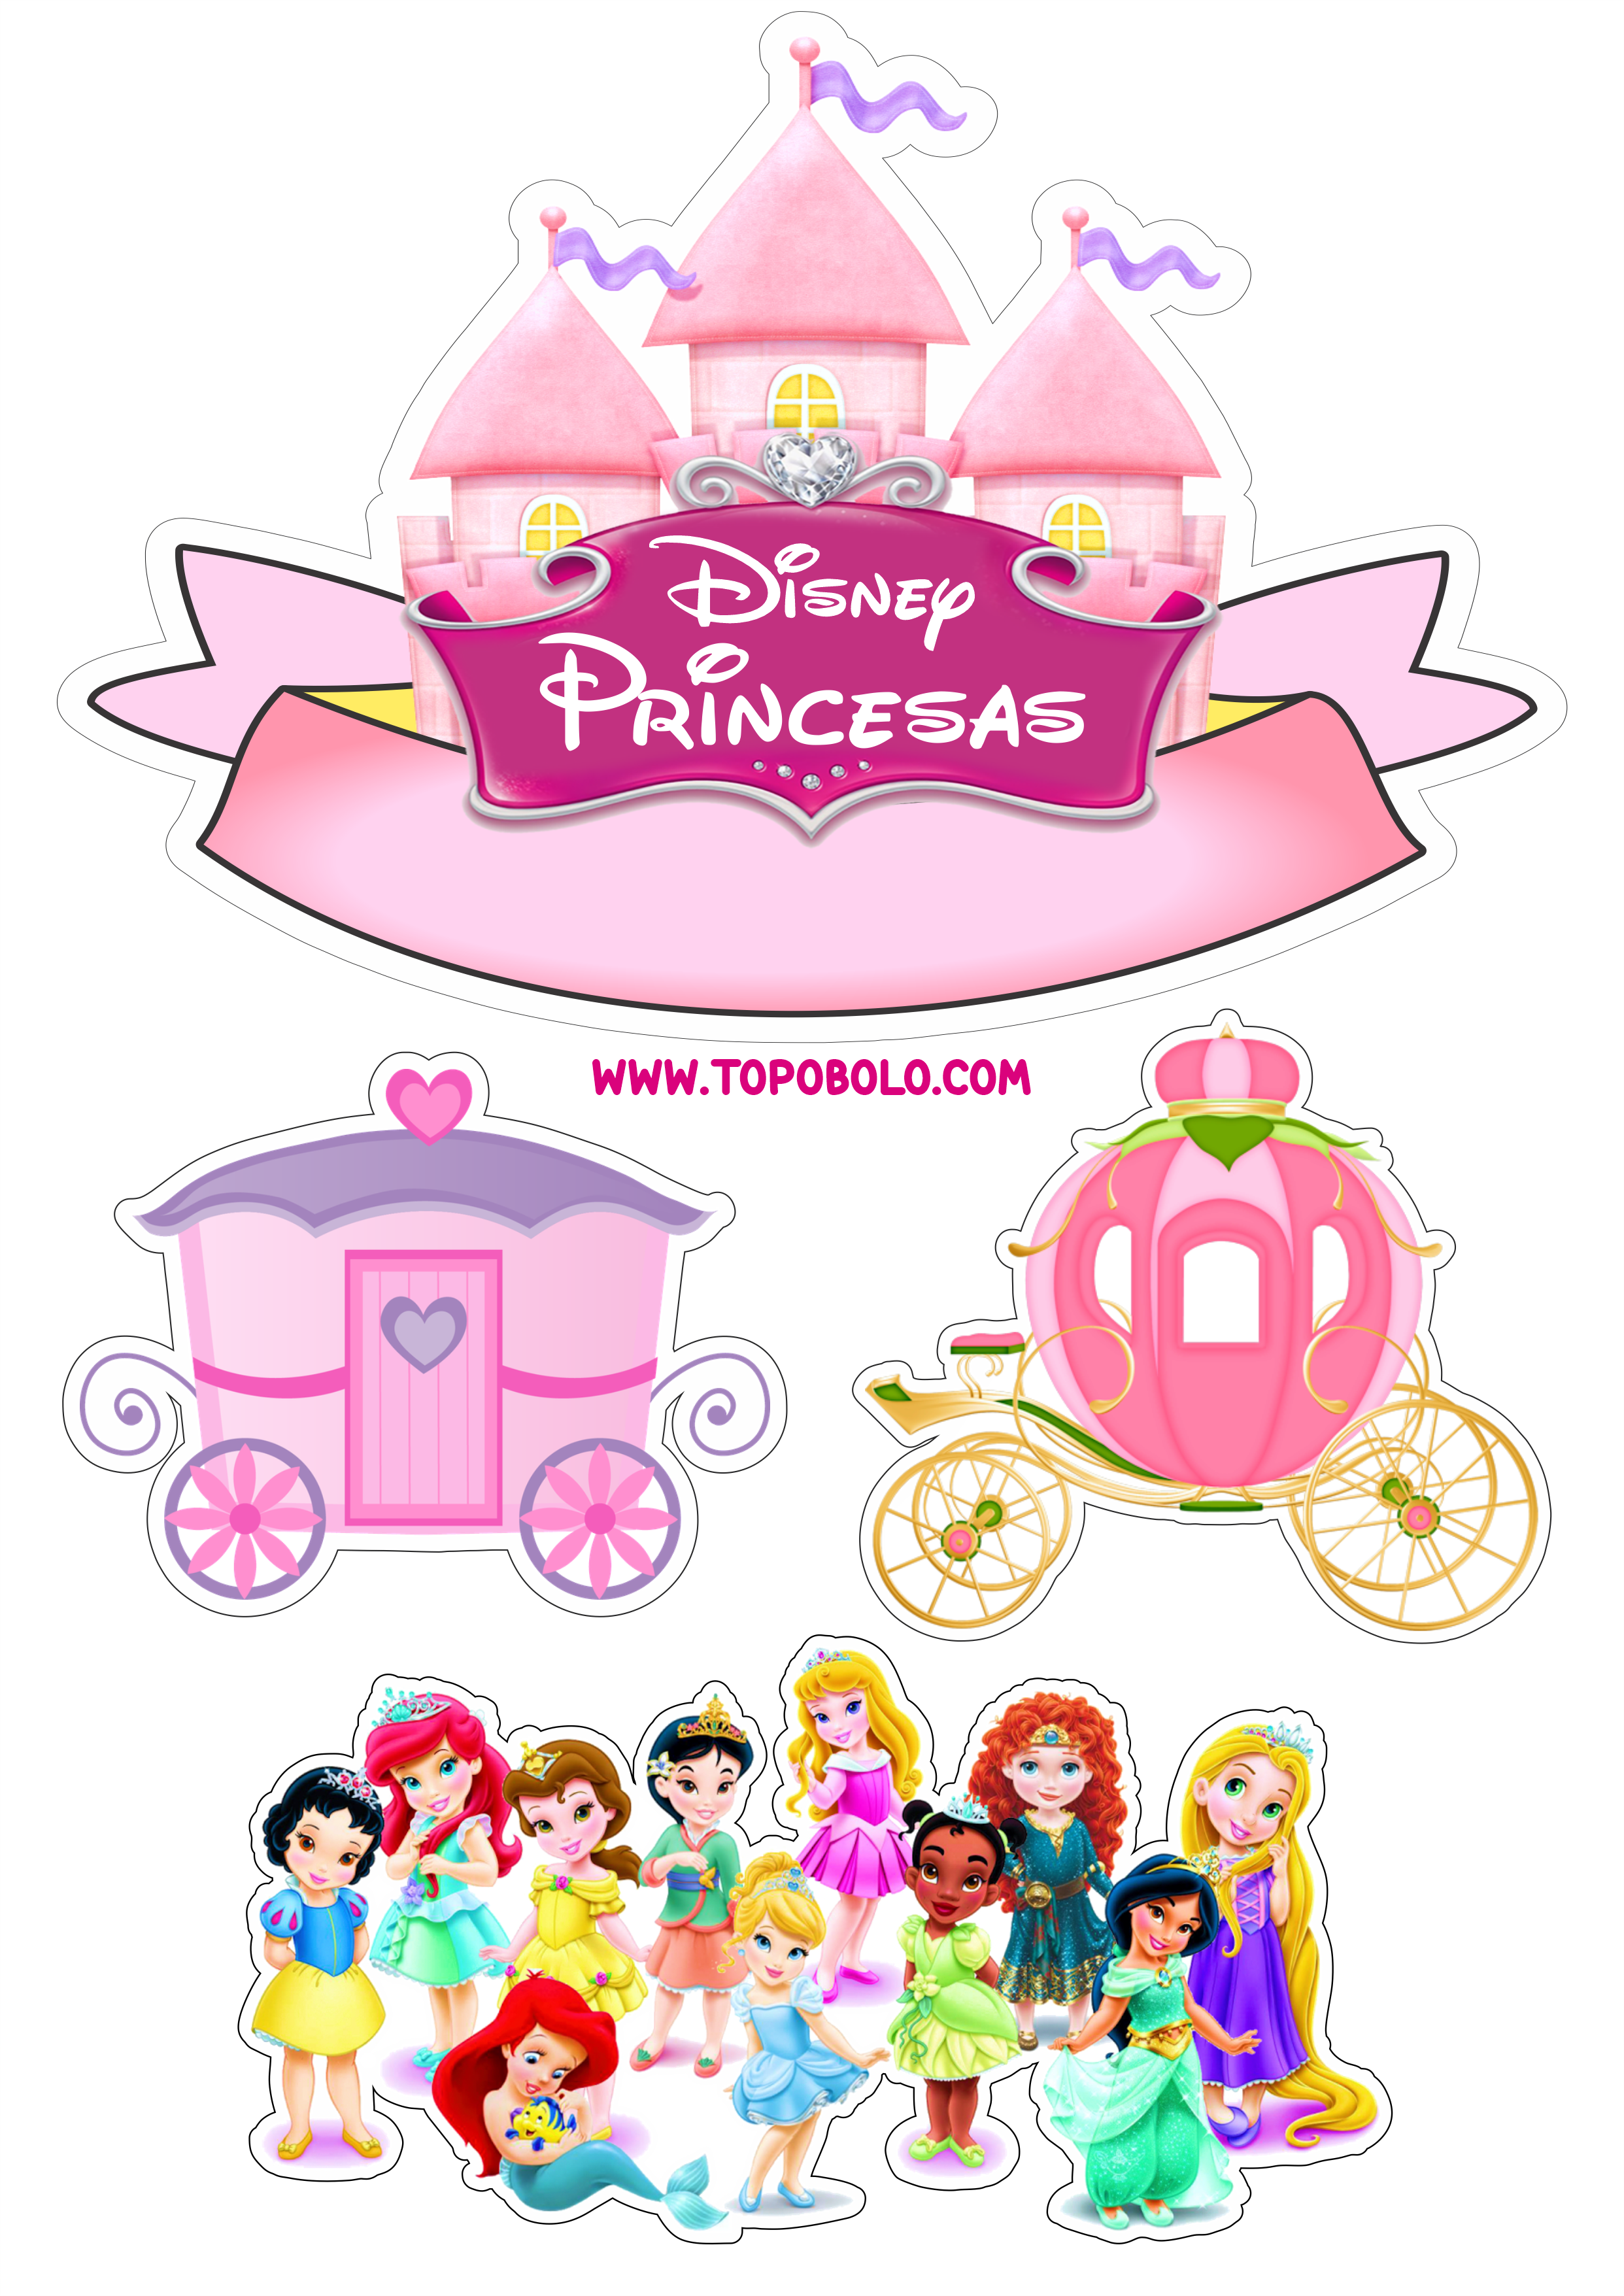 Princesas Disney topo de bolo pronto para imprimir png